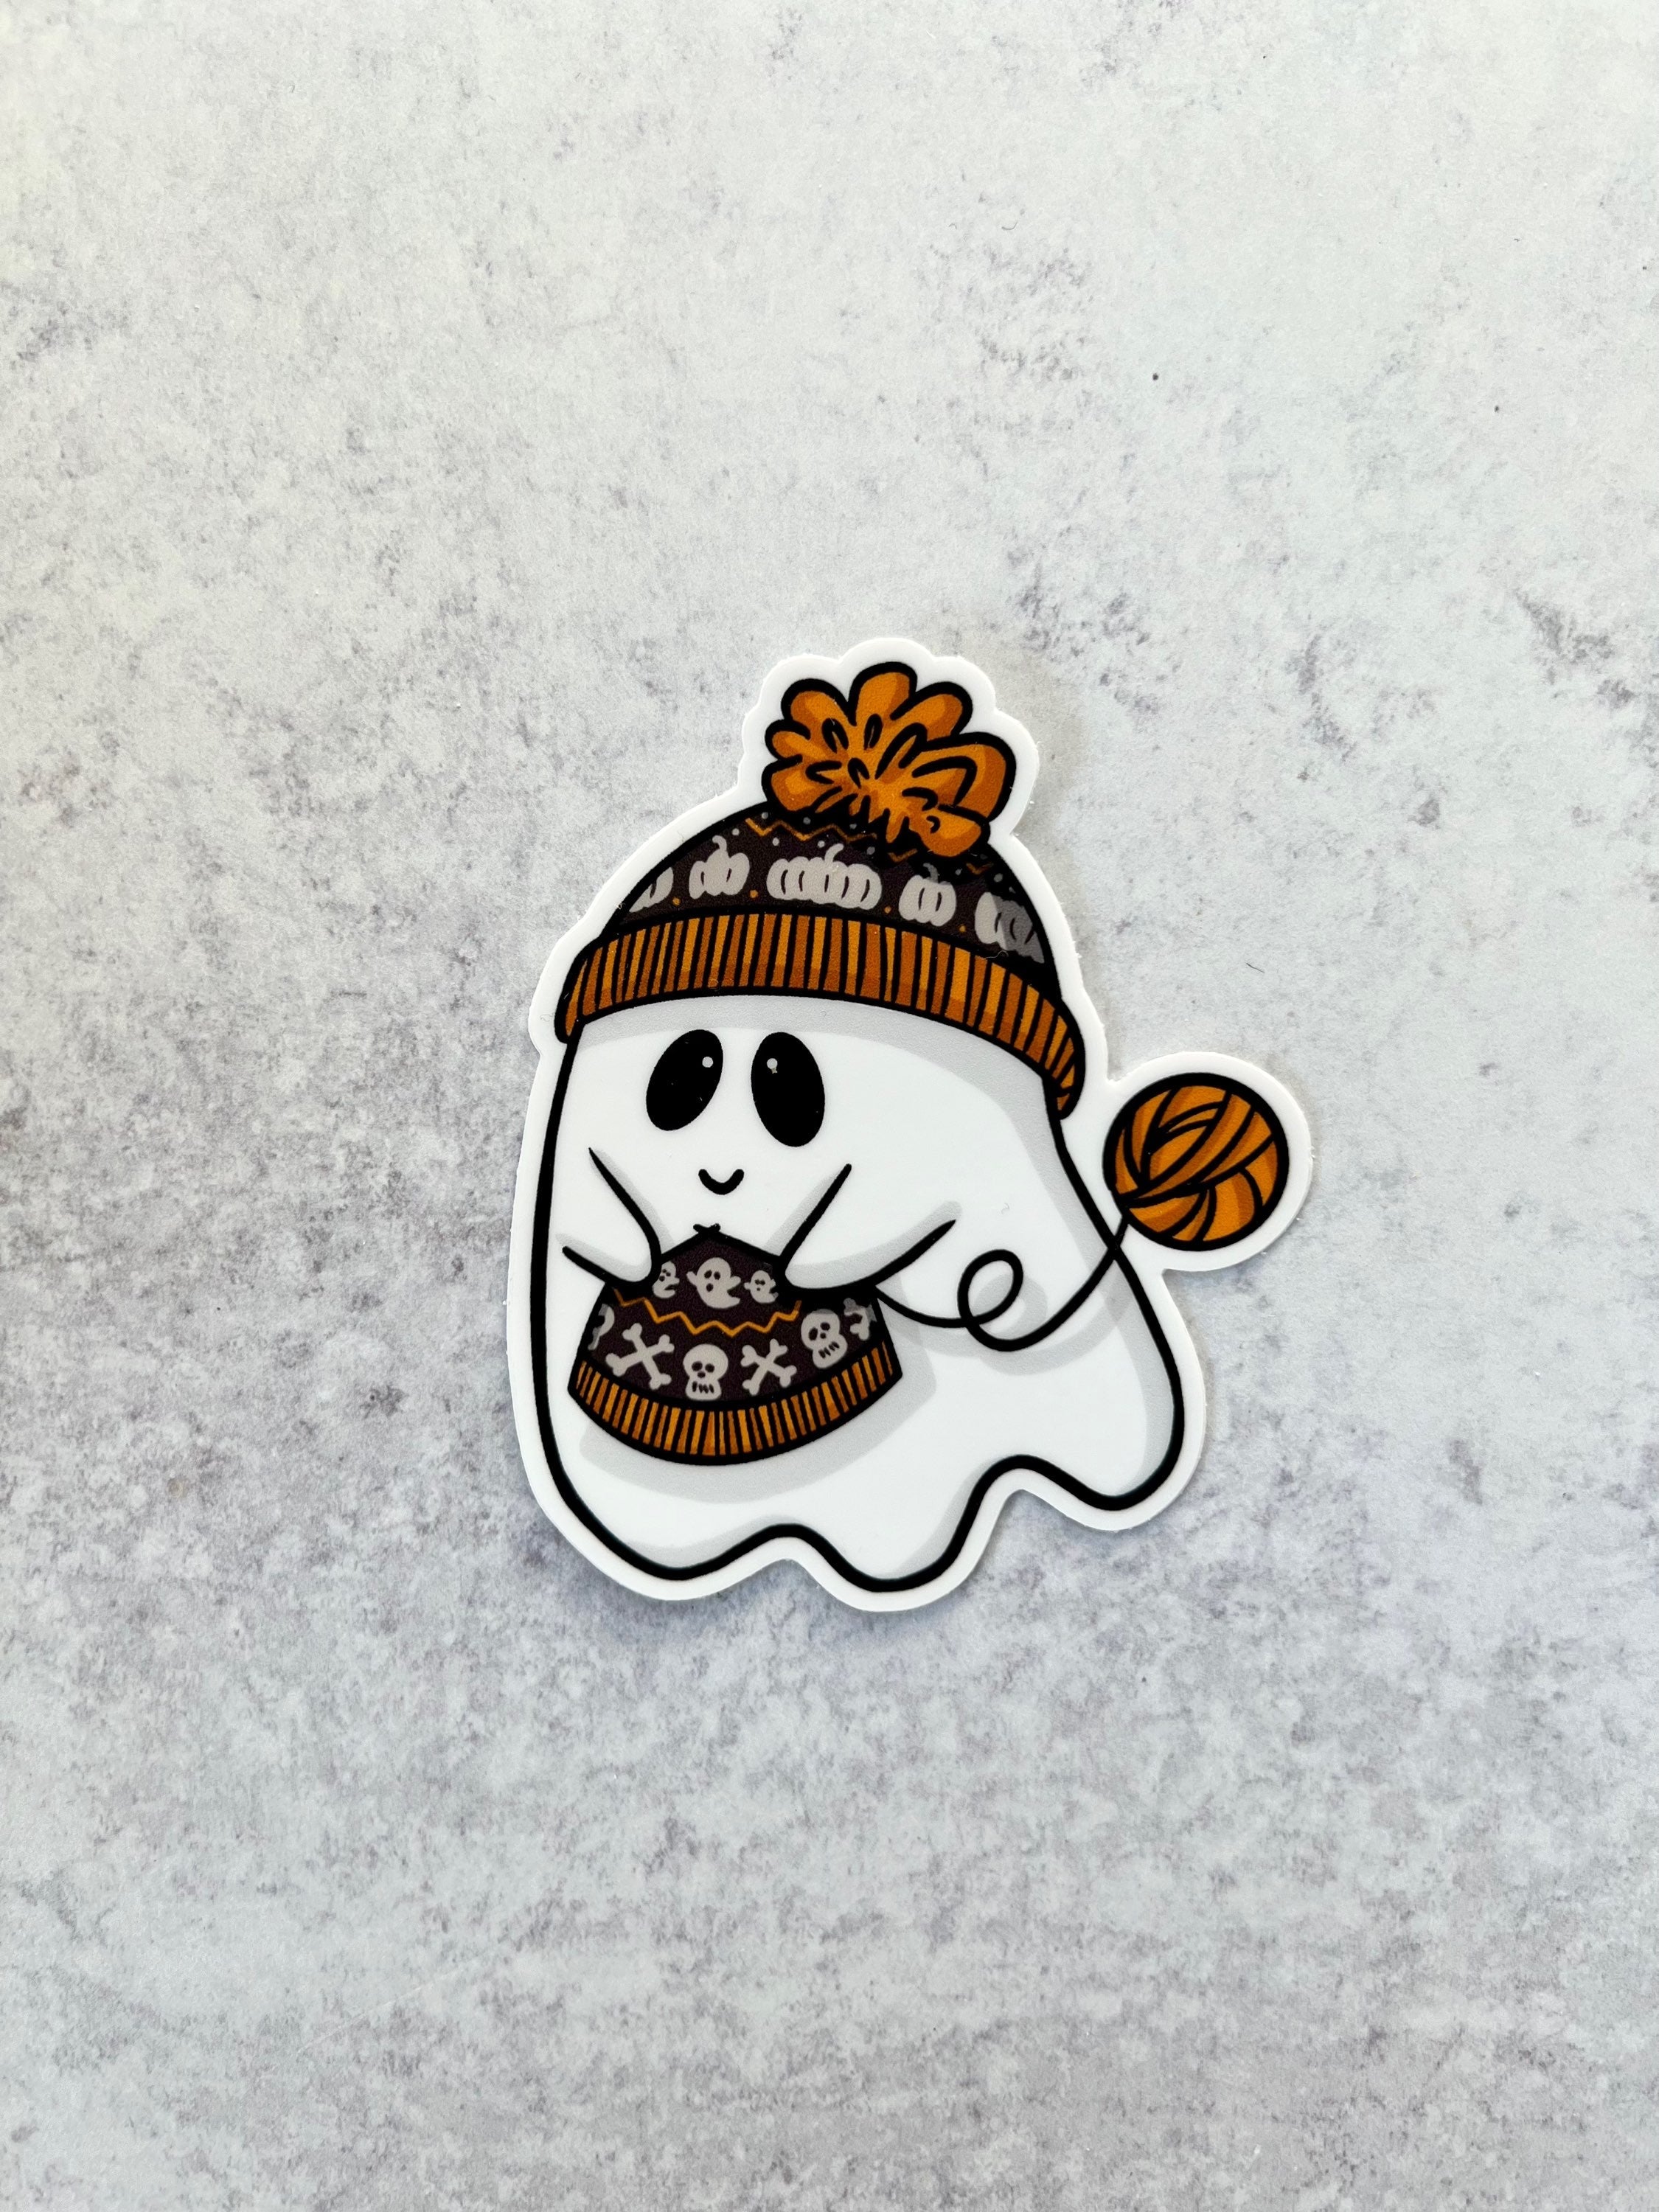 Sticker - Knitting Ghostie - 3x3in